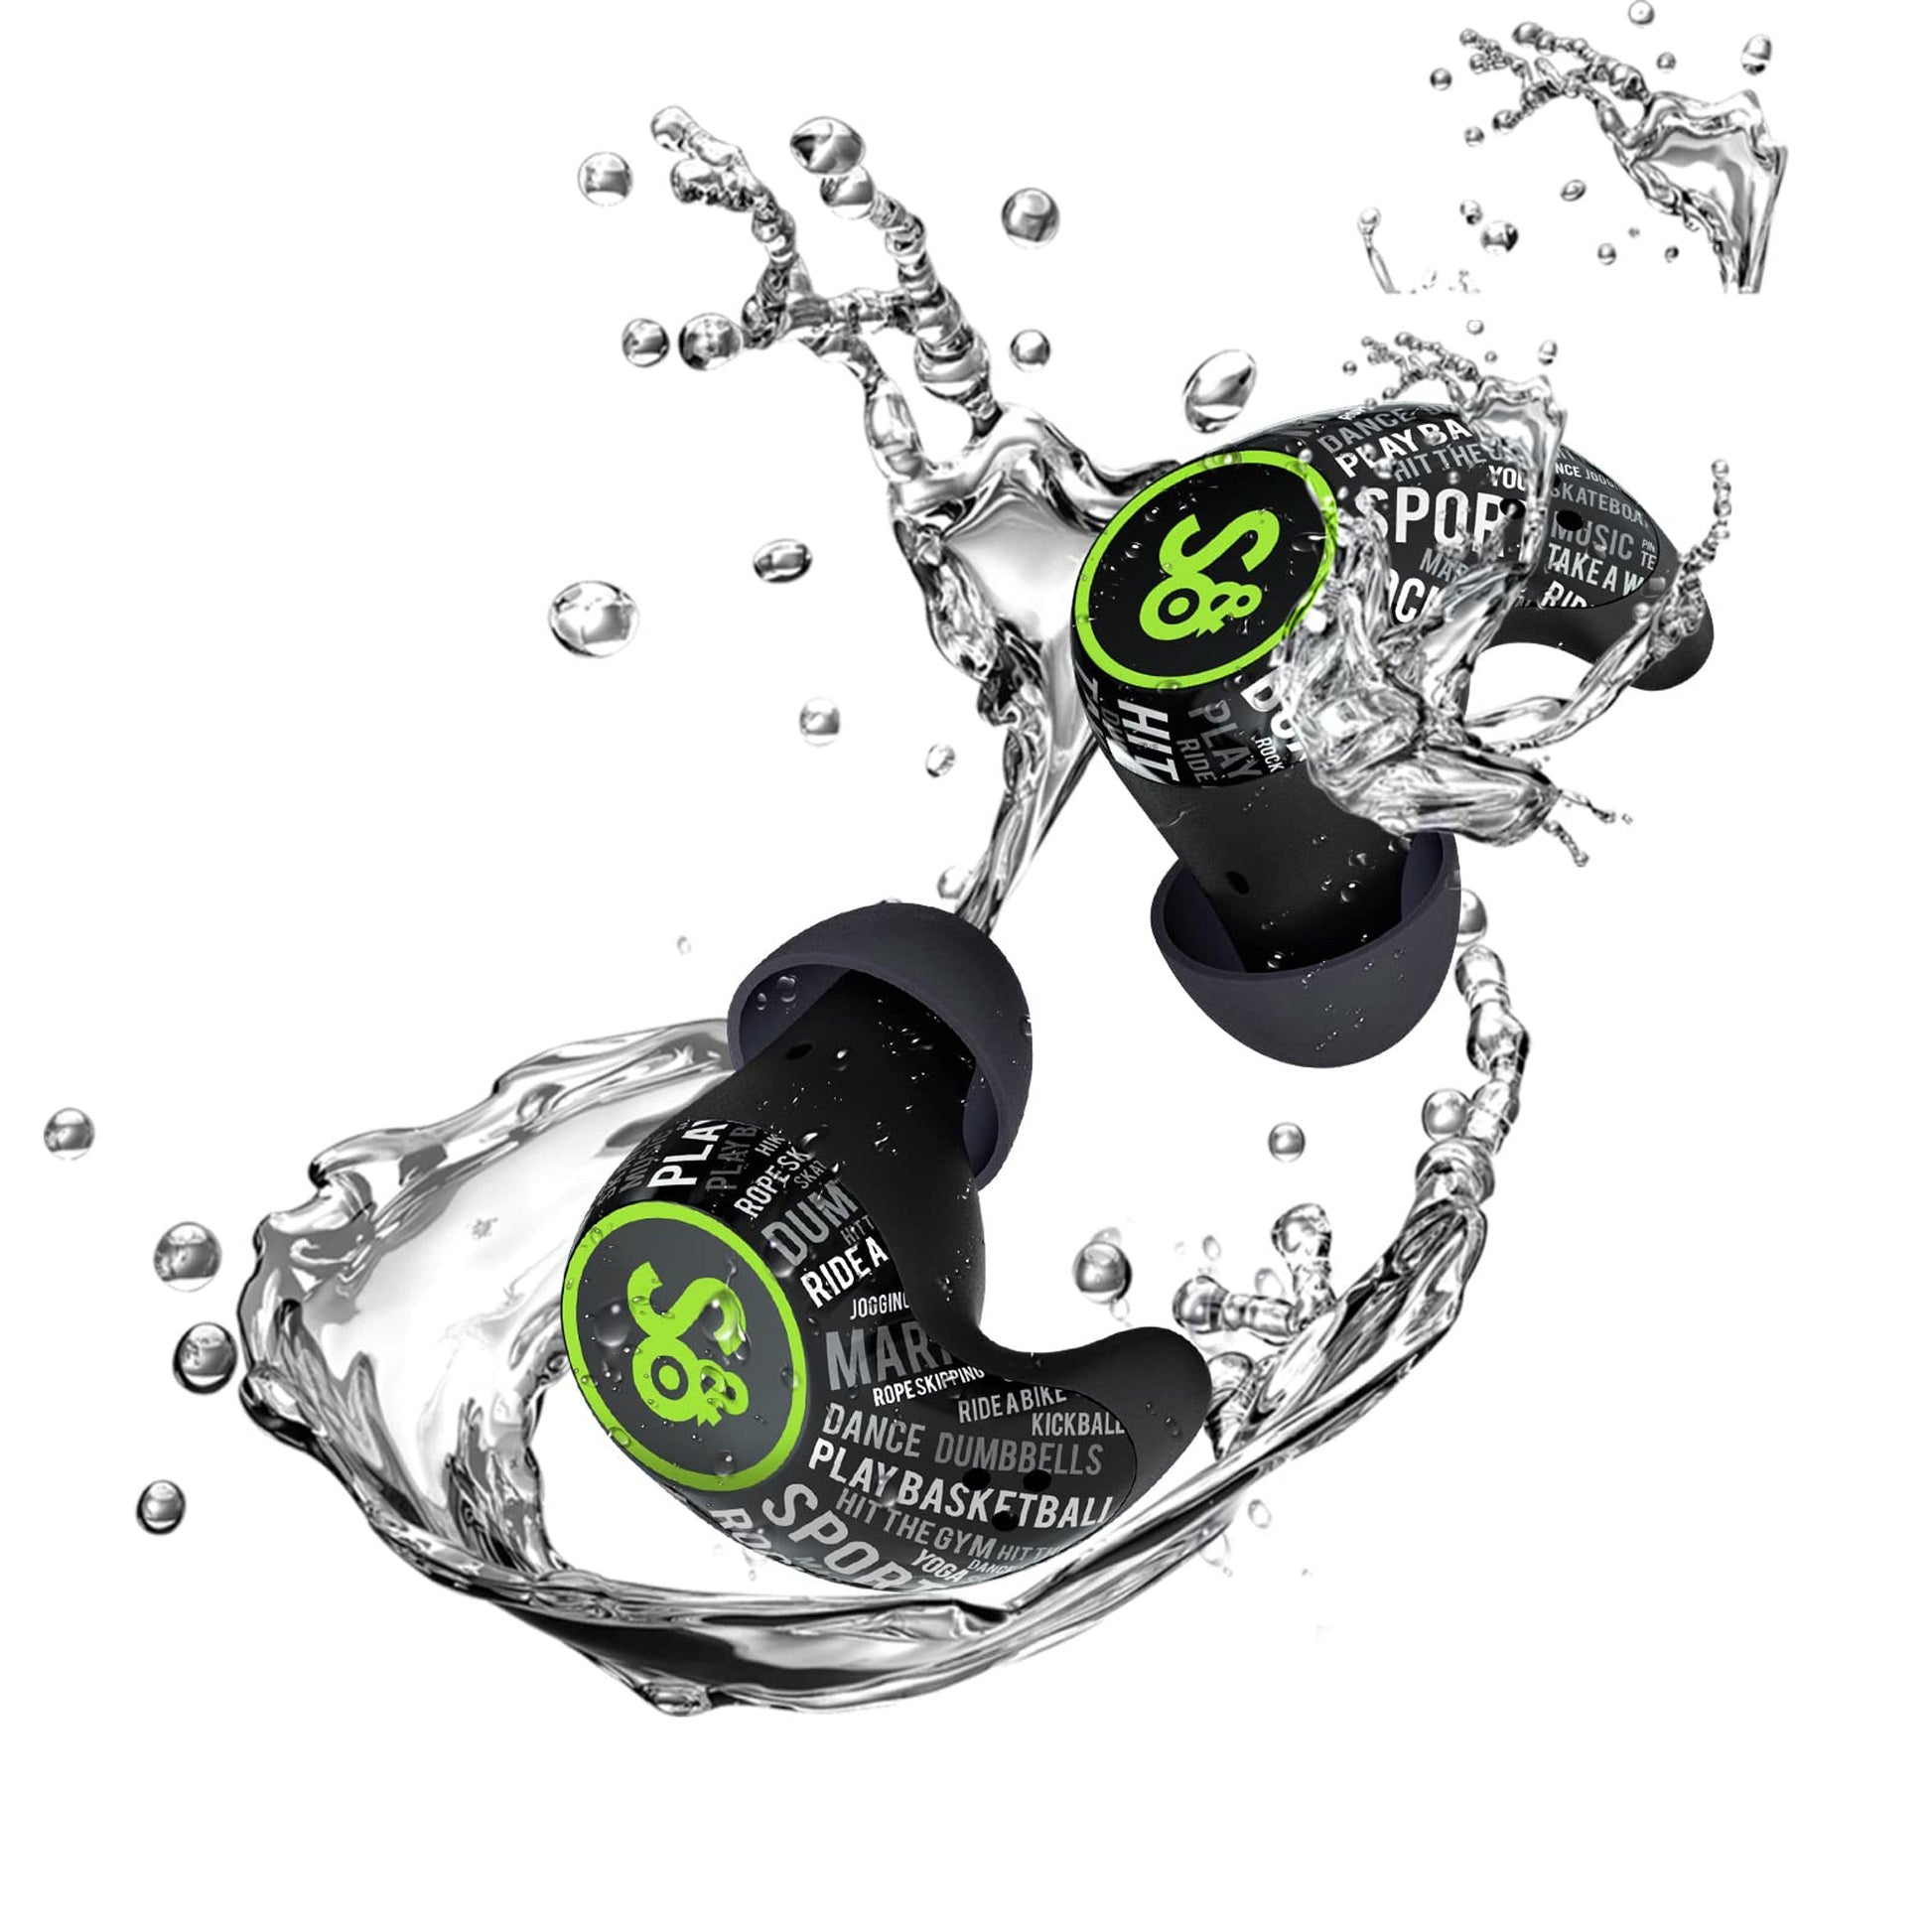 Mifo S Active - Best Waterproof Earbuds with IPX7